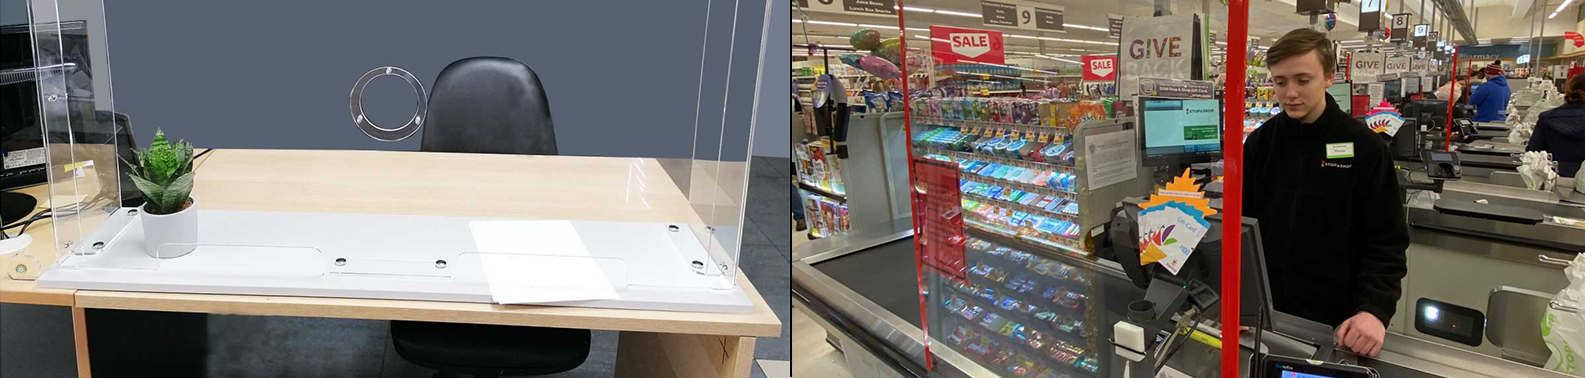 Cashier Plexiglass Cashier Checkout Shield With Access Holes